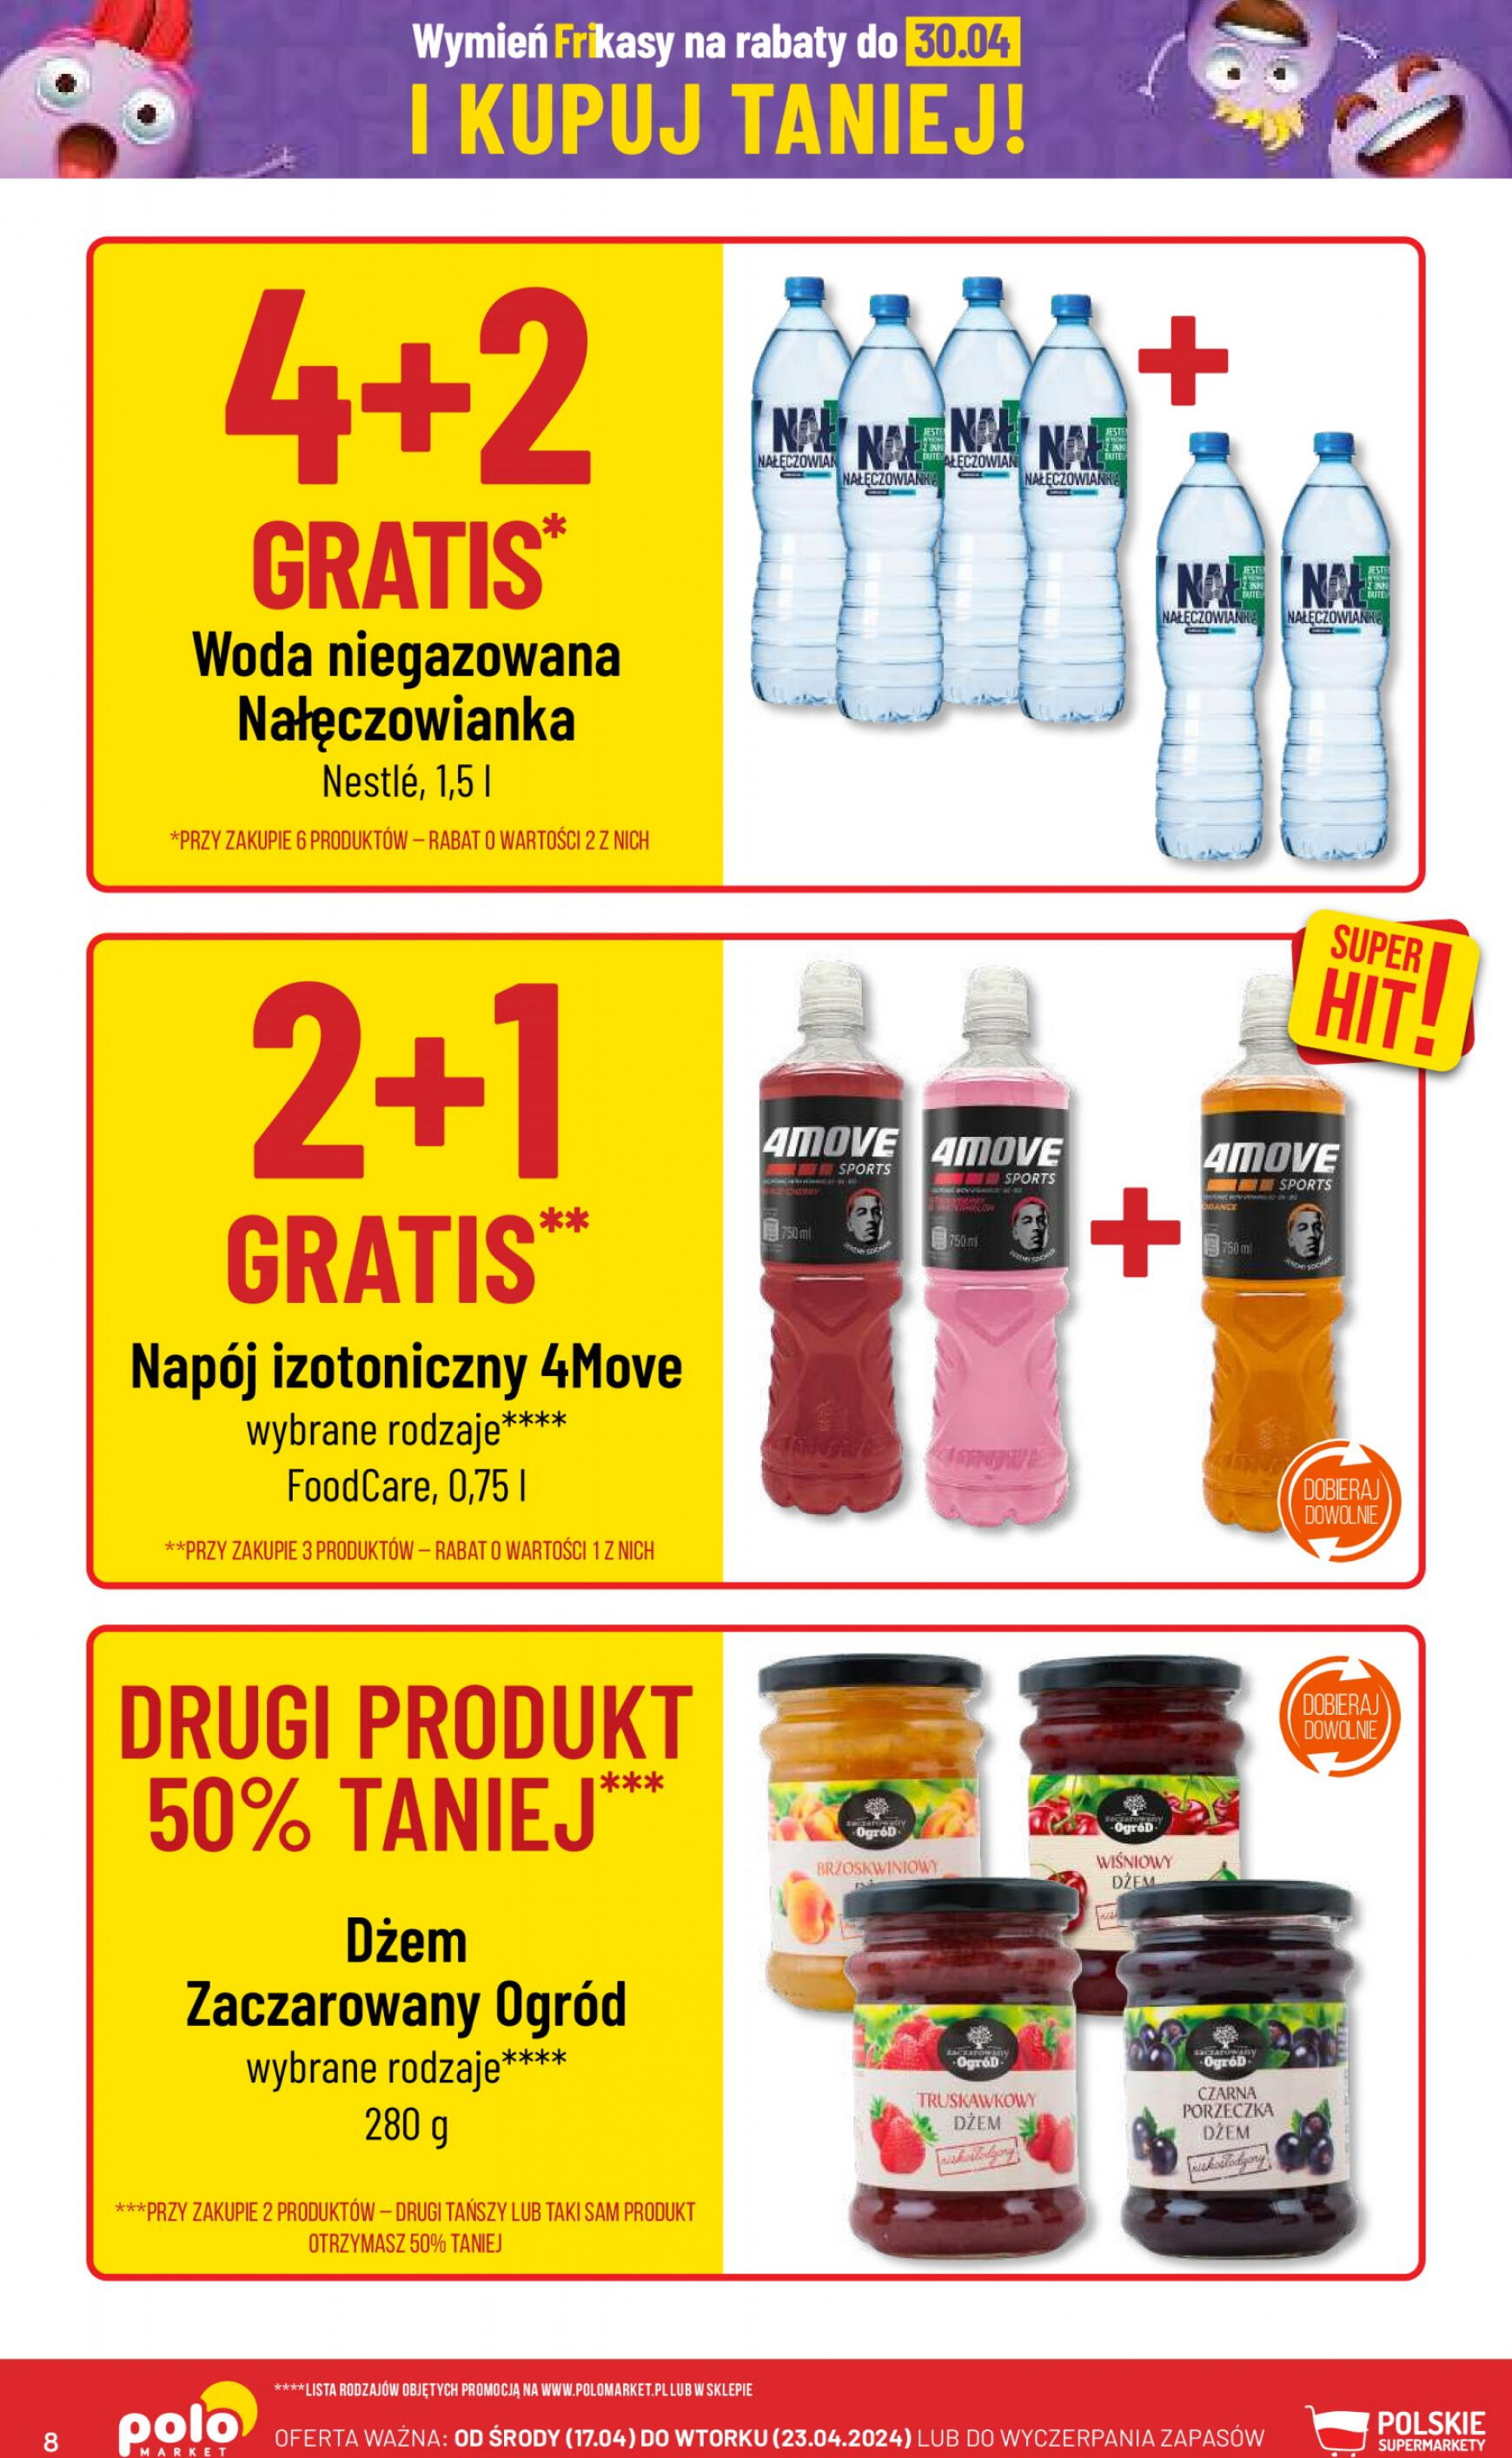 polomarket - POLO market gazetka aktualna ważna od 17.04. - 23.04. - page: 8